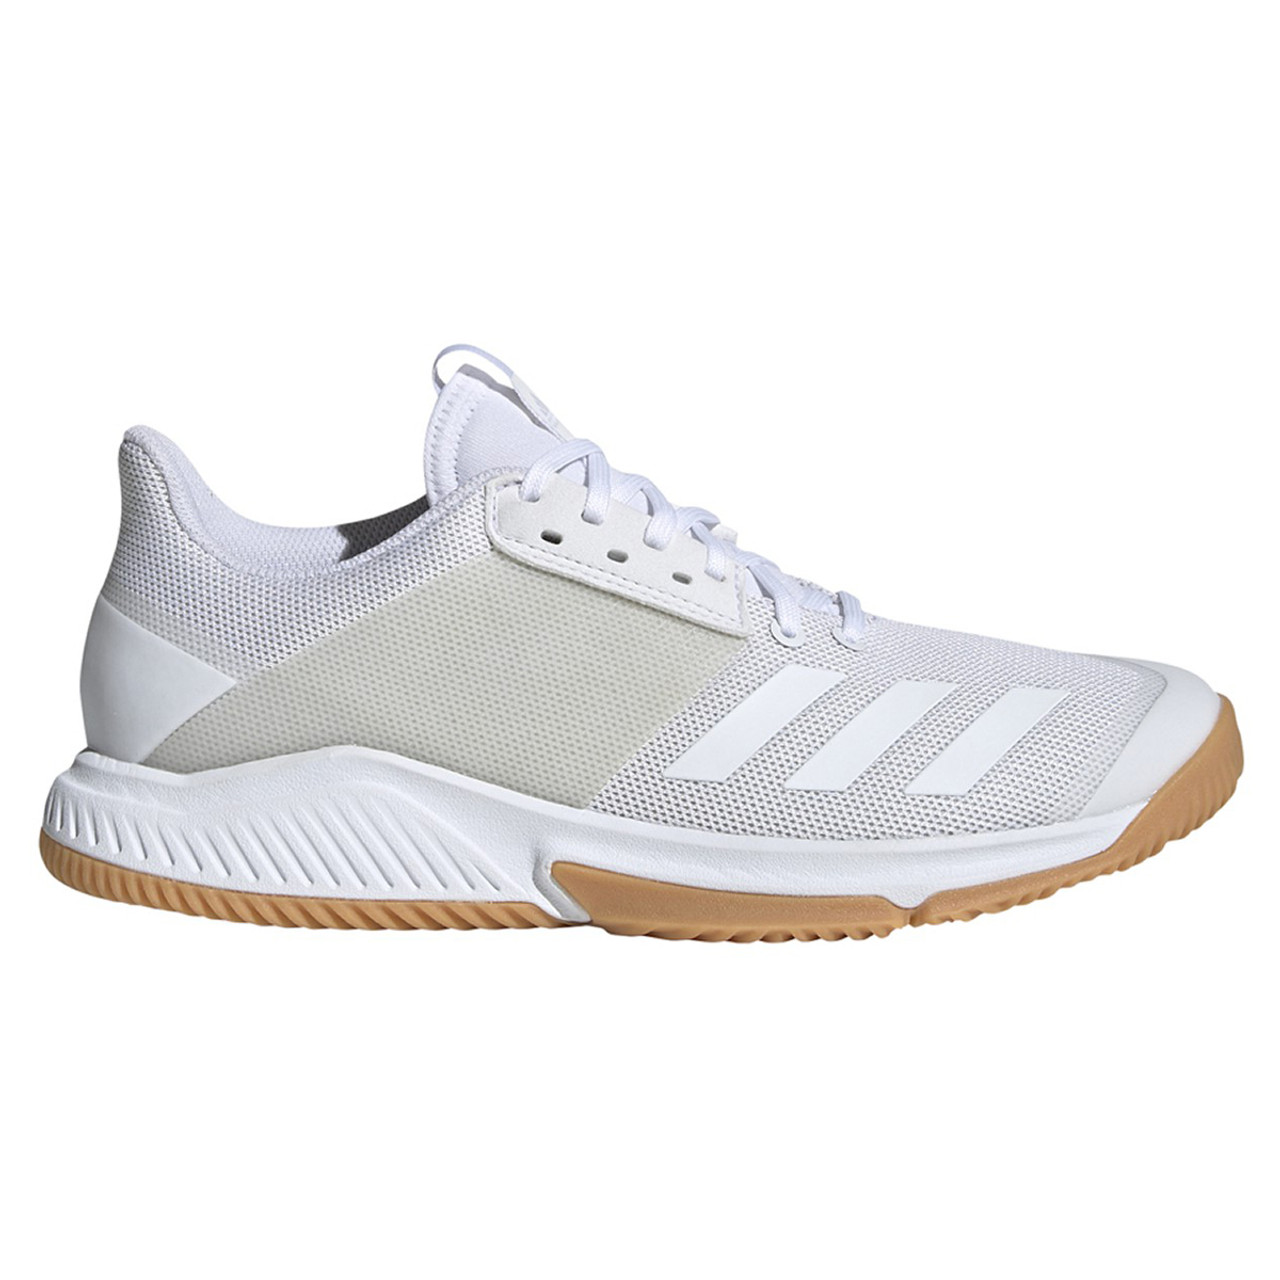 Adidas Crazyflight Team Women's Volleyball Shoes D97700 - White, Gum